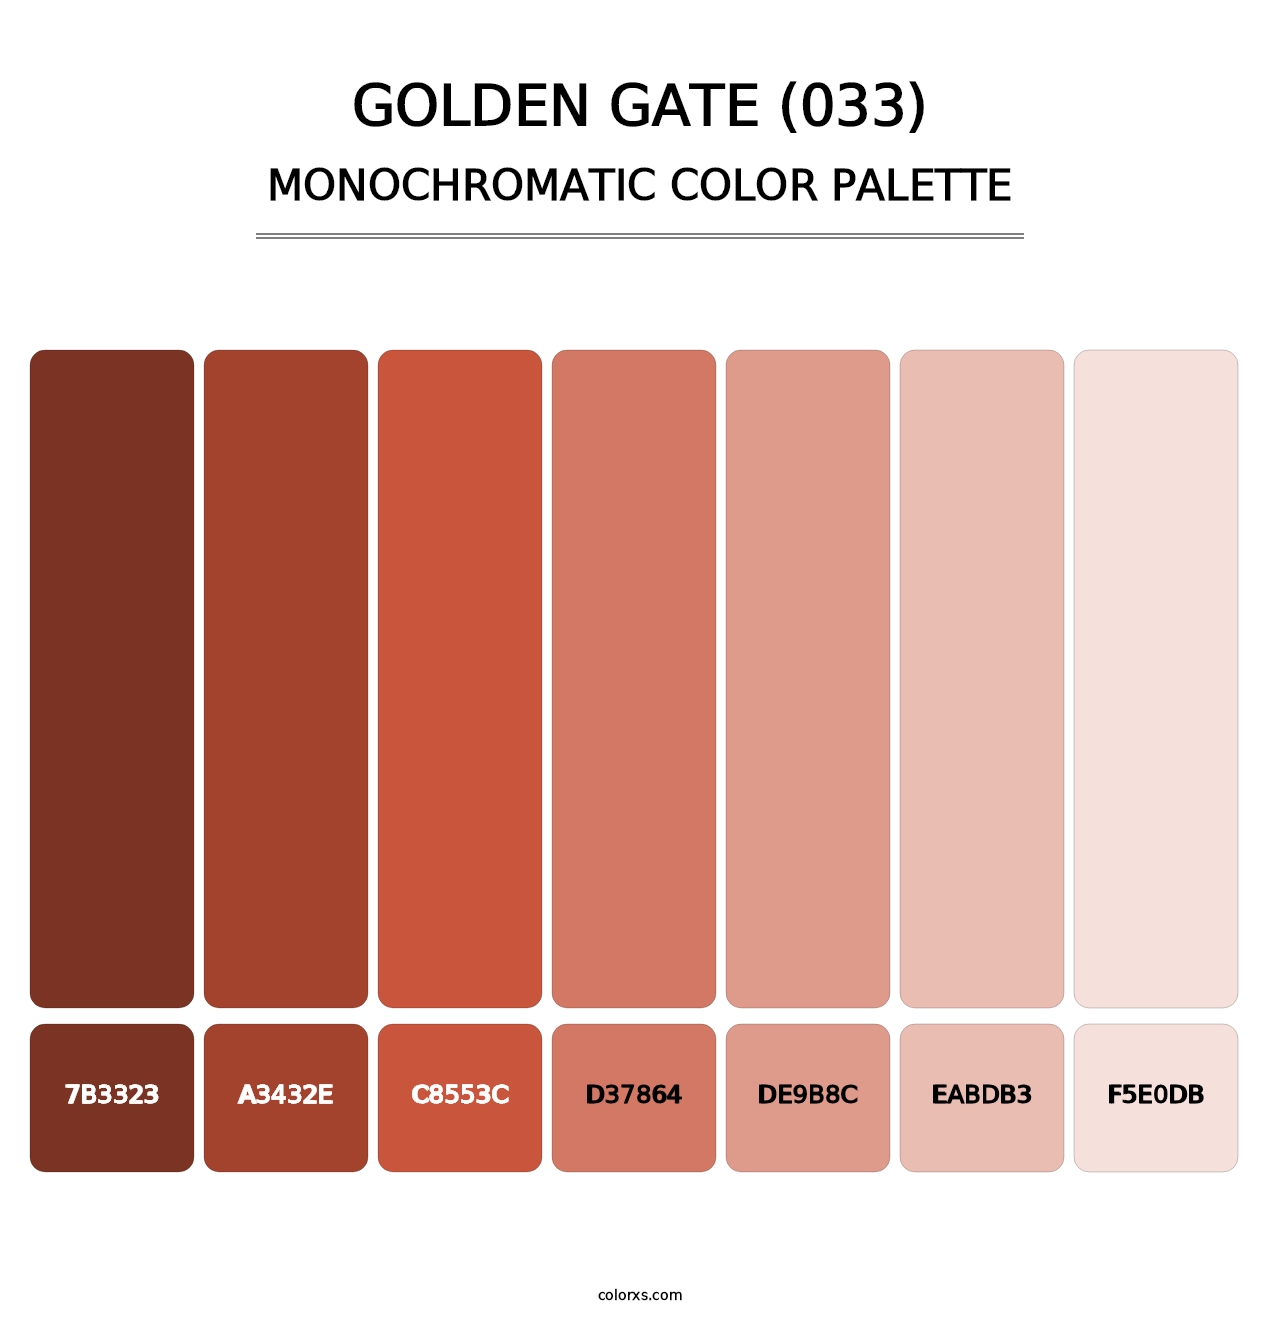 Golden Gate (033) - Monochromatic Color Palette